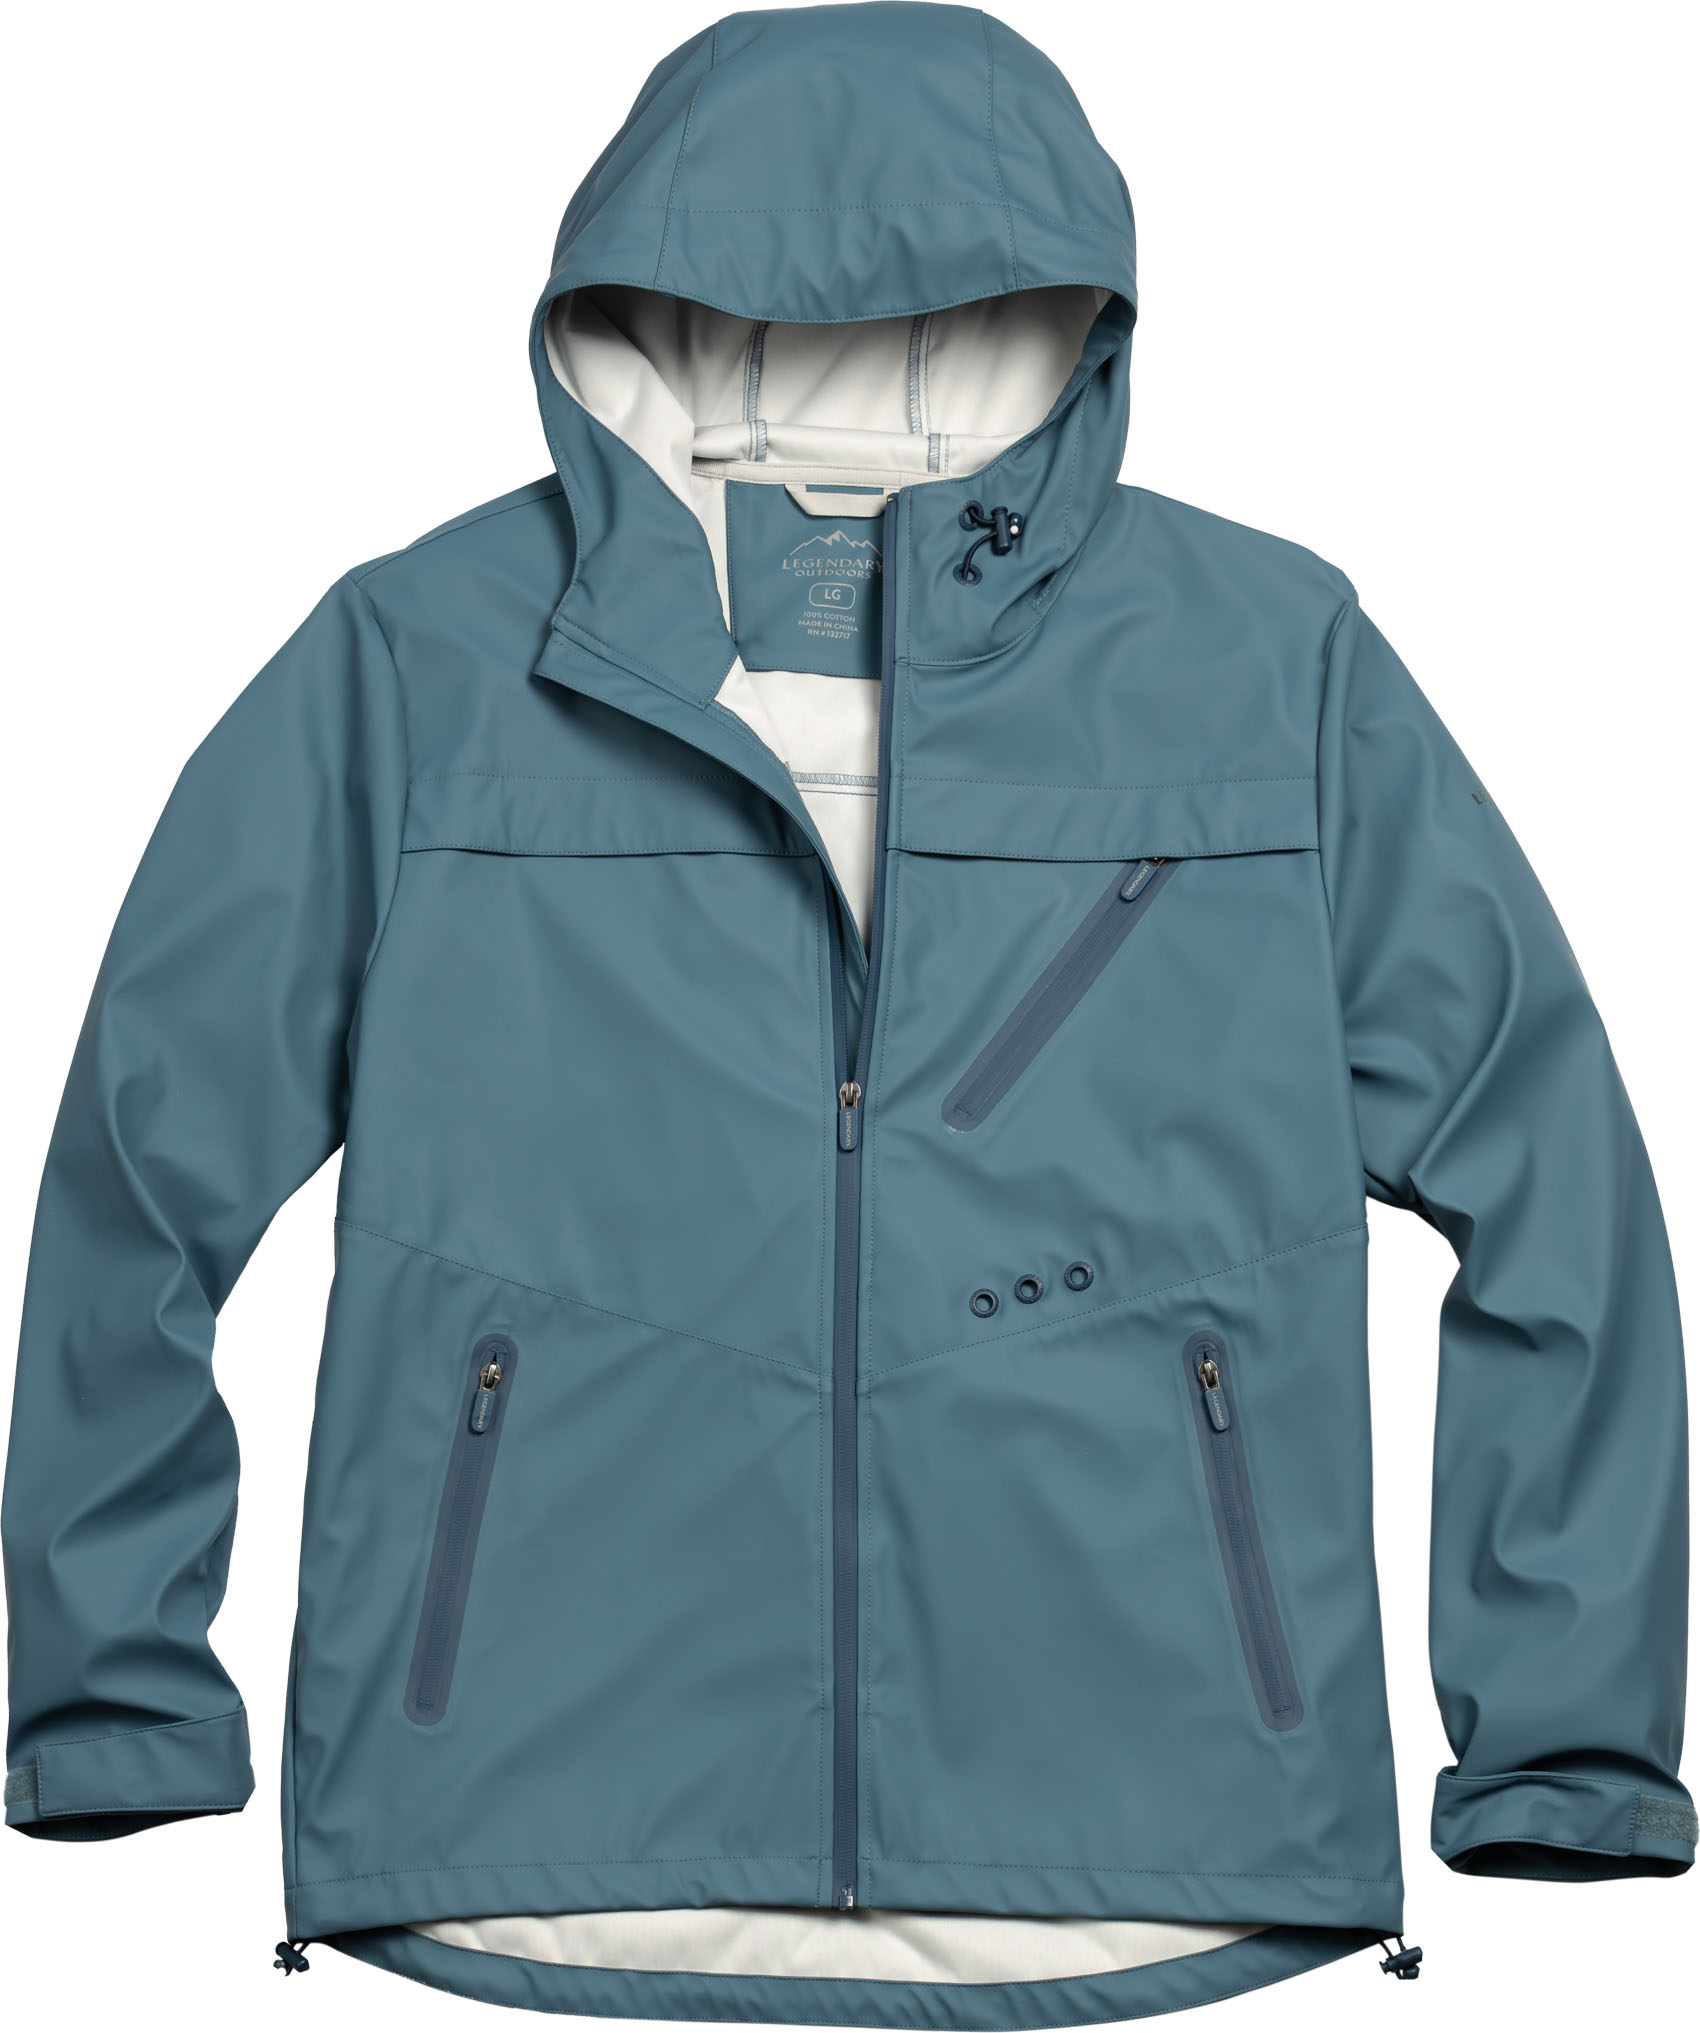 Legendary Whitetails Mens Water Resistant Fishing Rain Jacket Aegean Blue 3XT Polyester